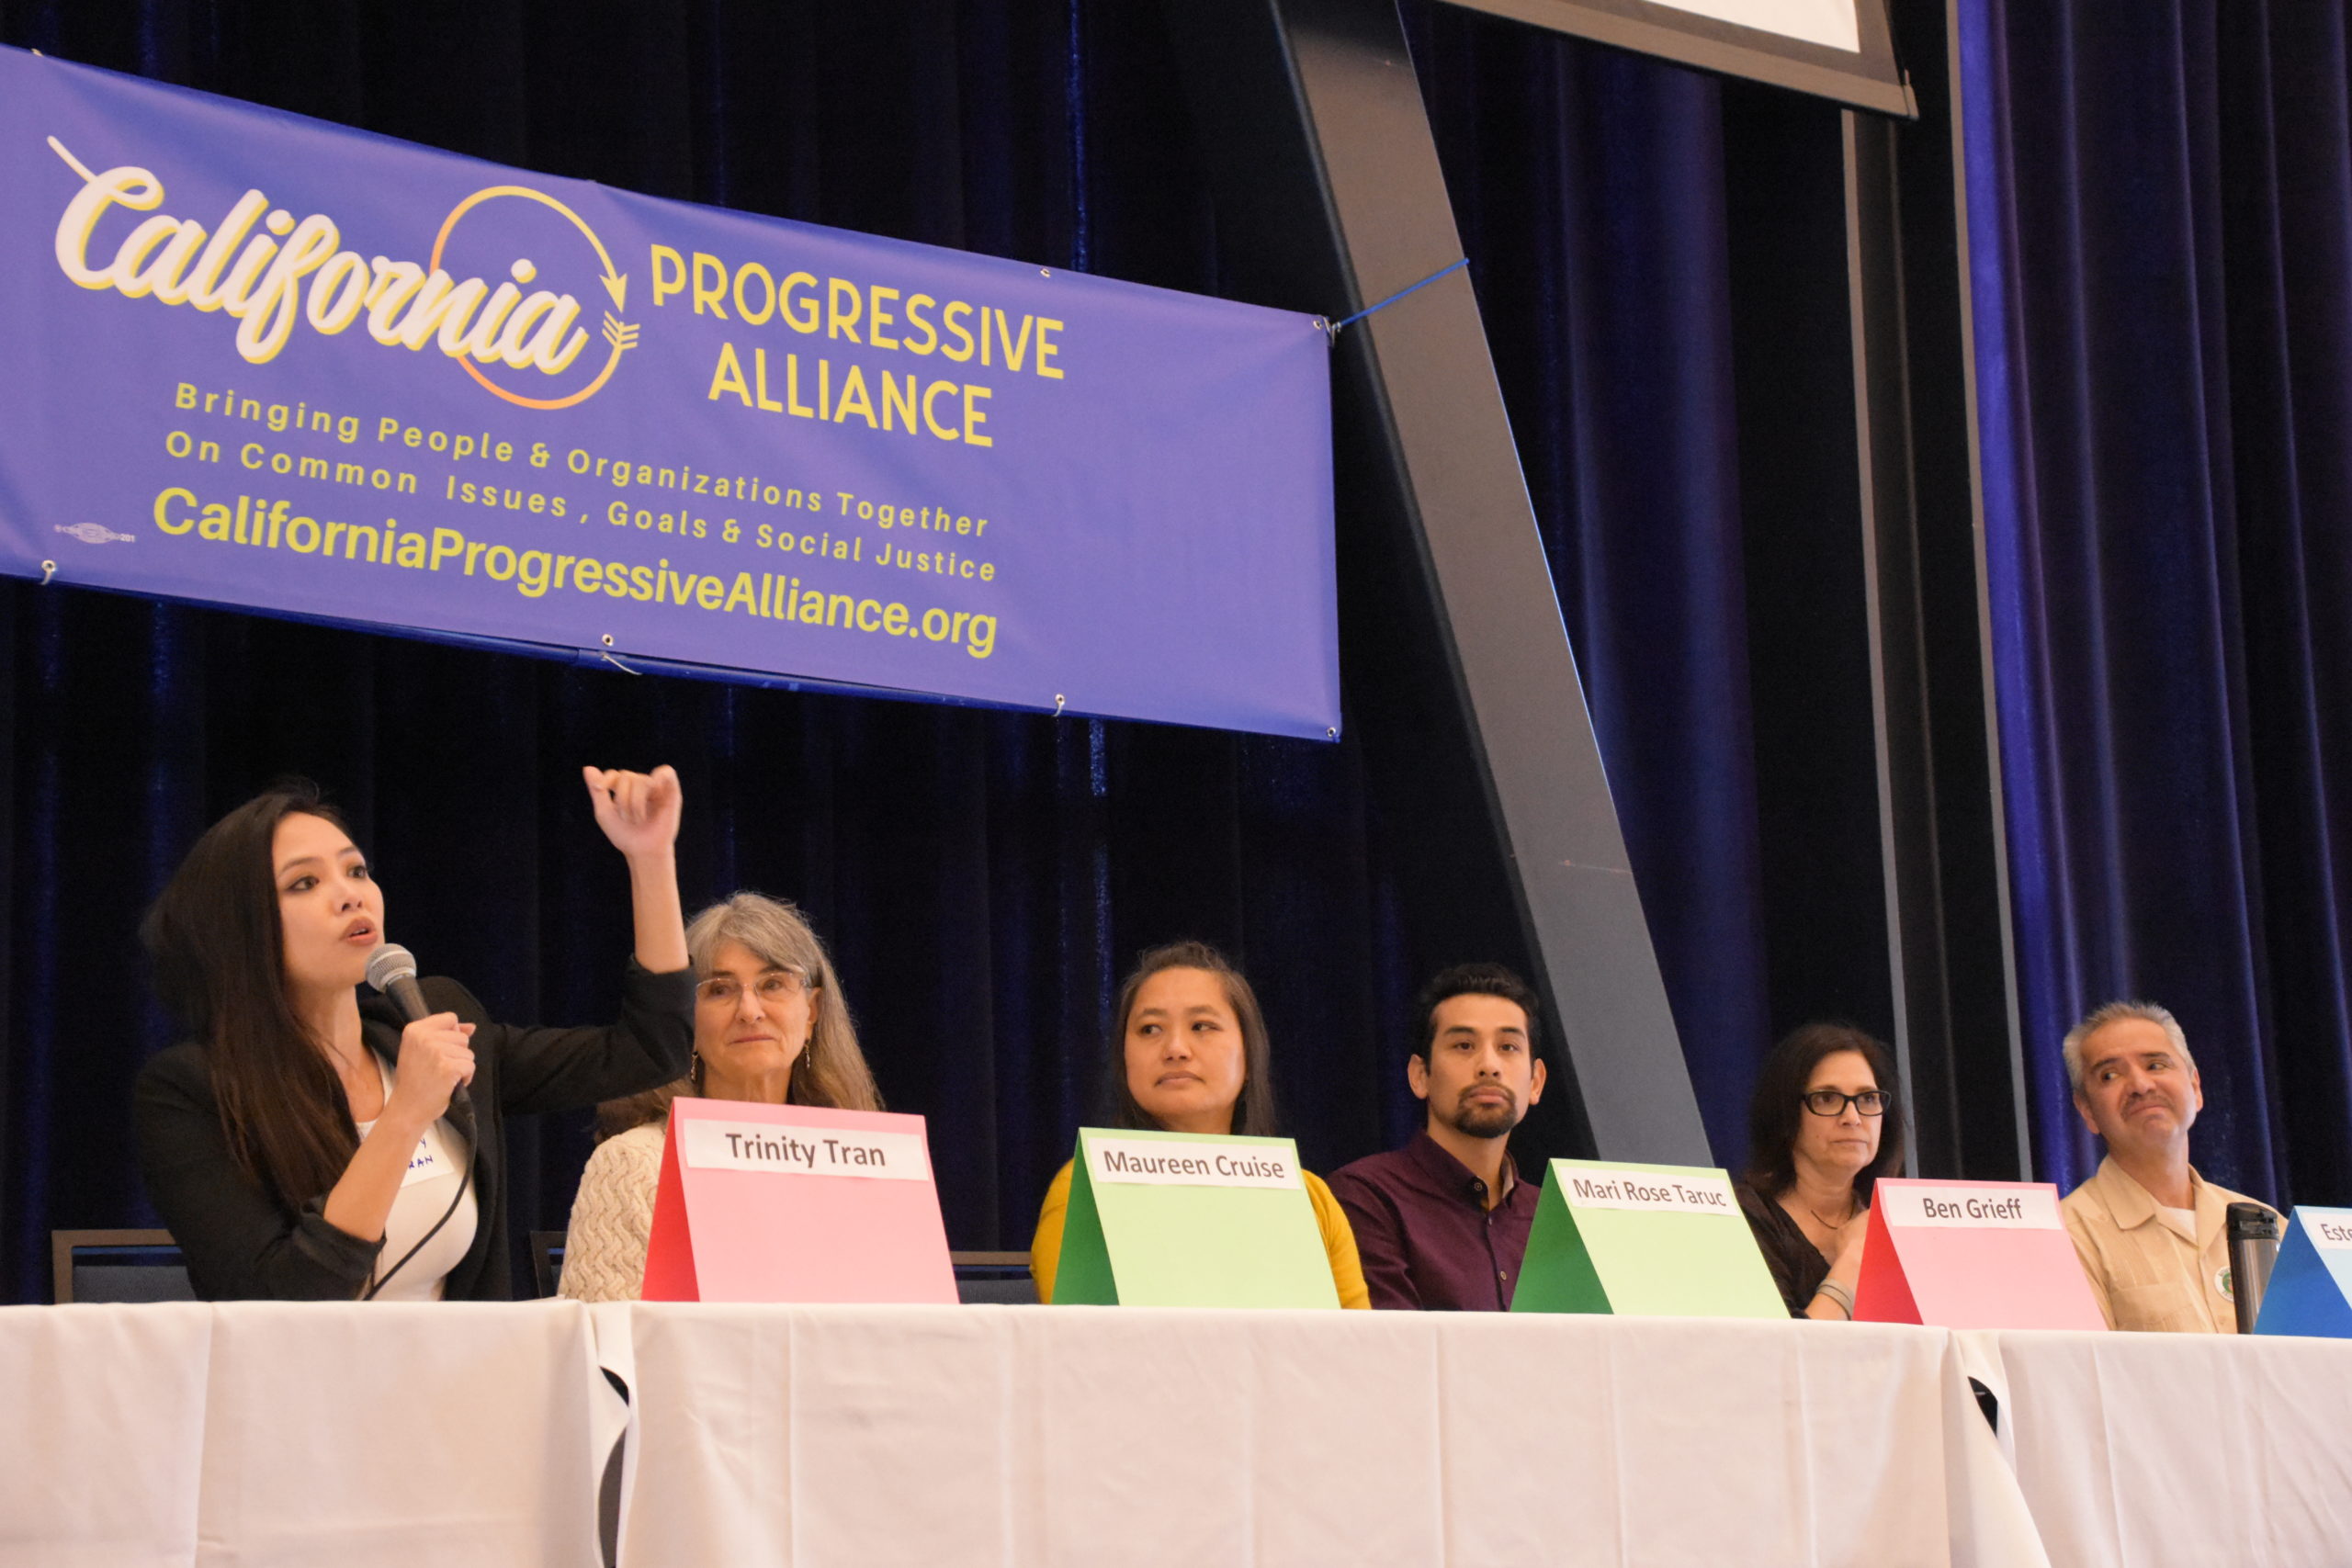 California Progressive Alliance Annual Meeting 2020 - Panel Discussion